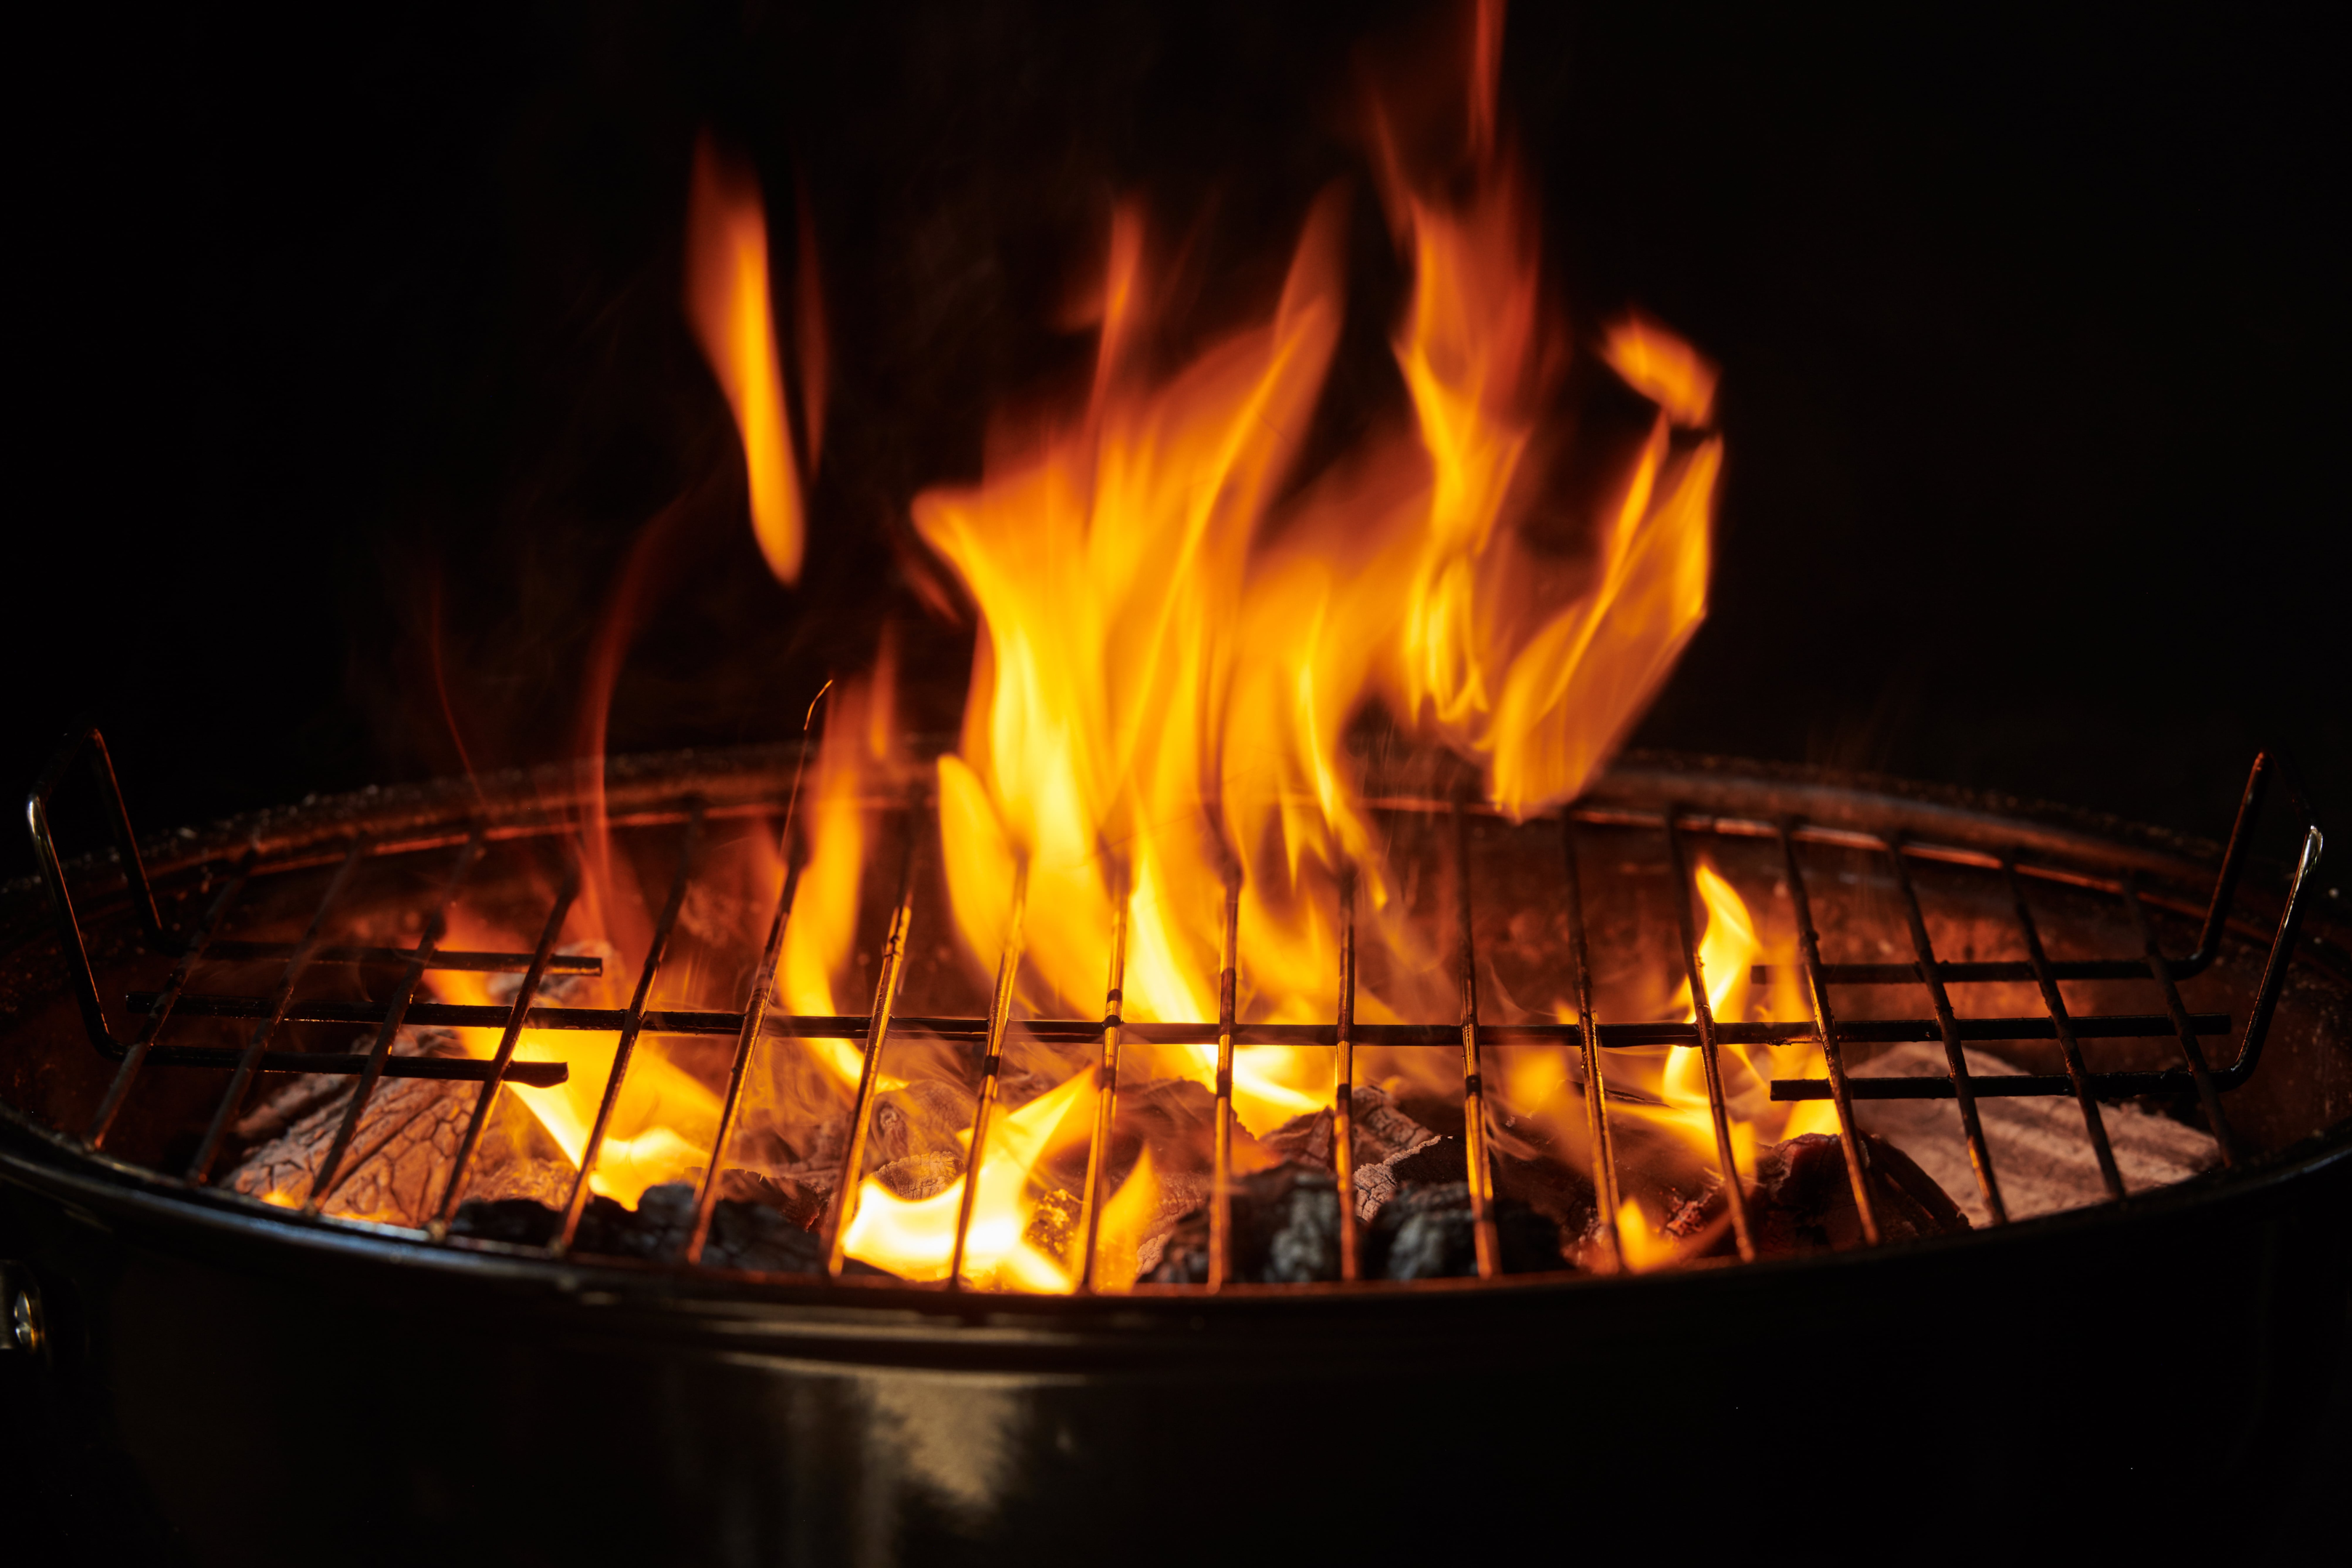 Direct grill heat